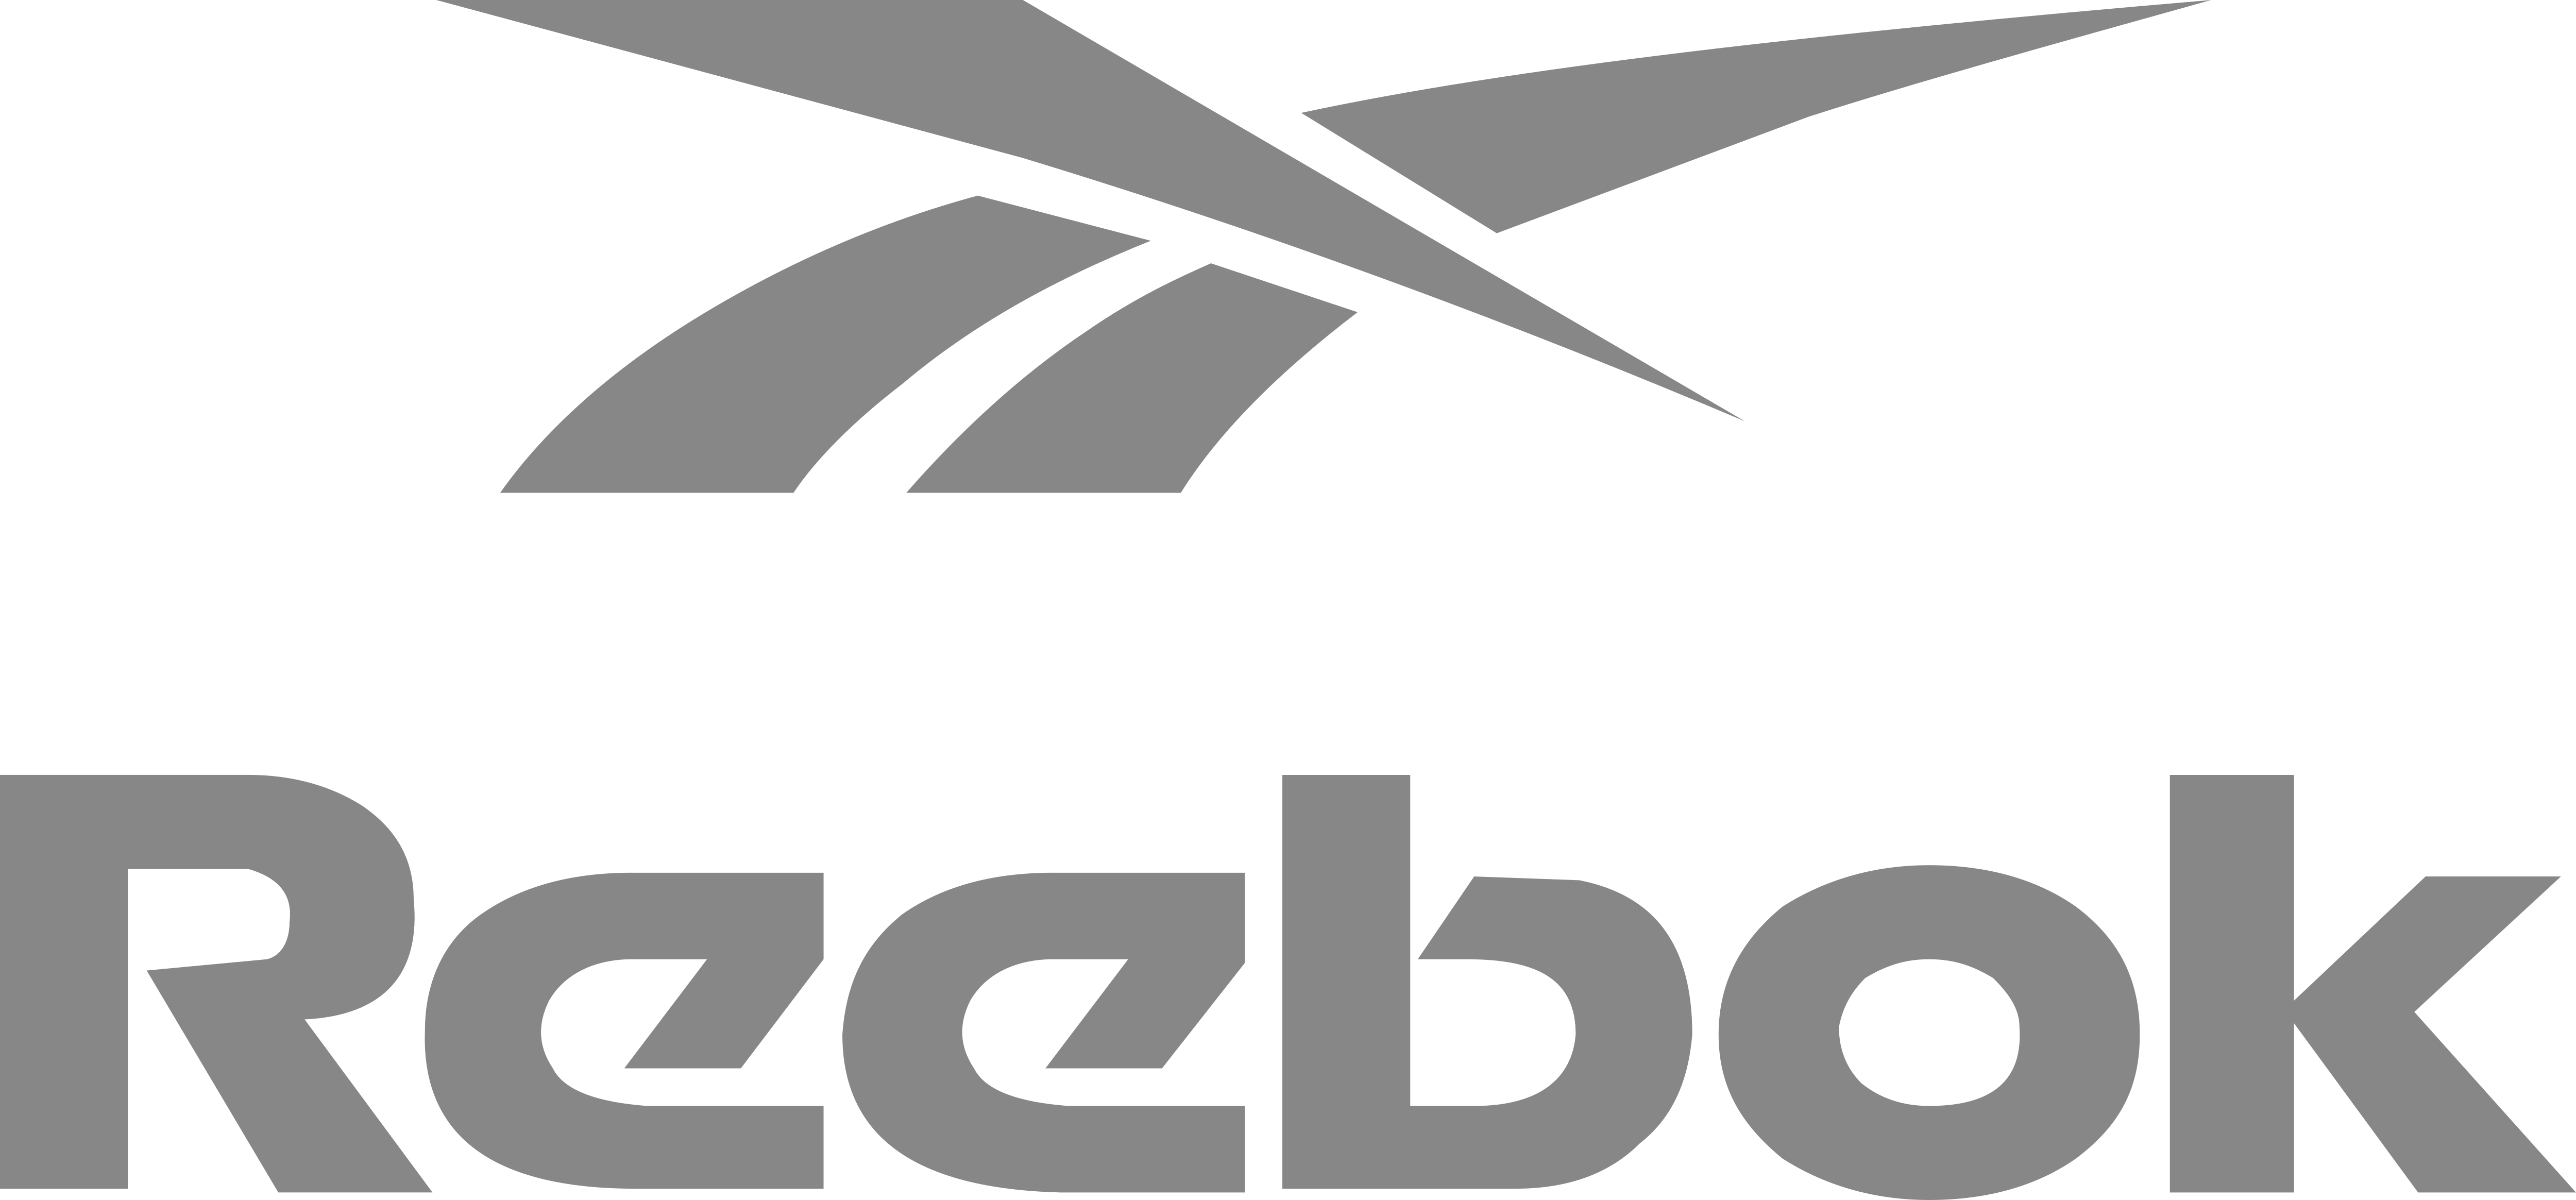 Reebok International Logo | vlr.eng.br